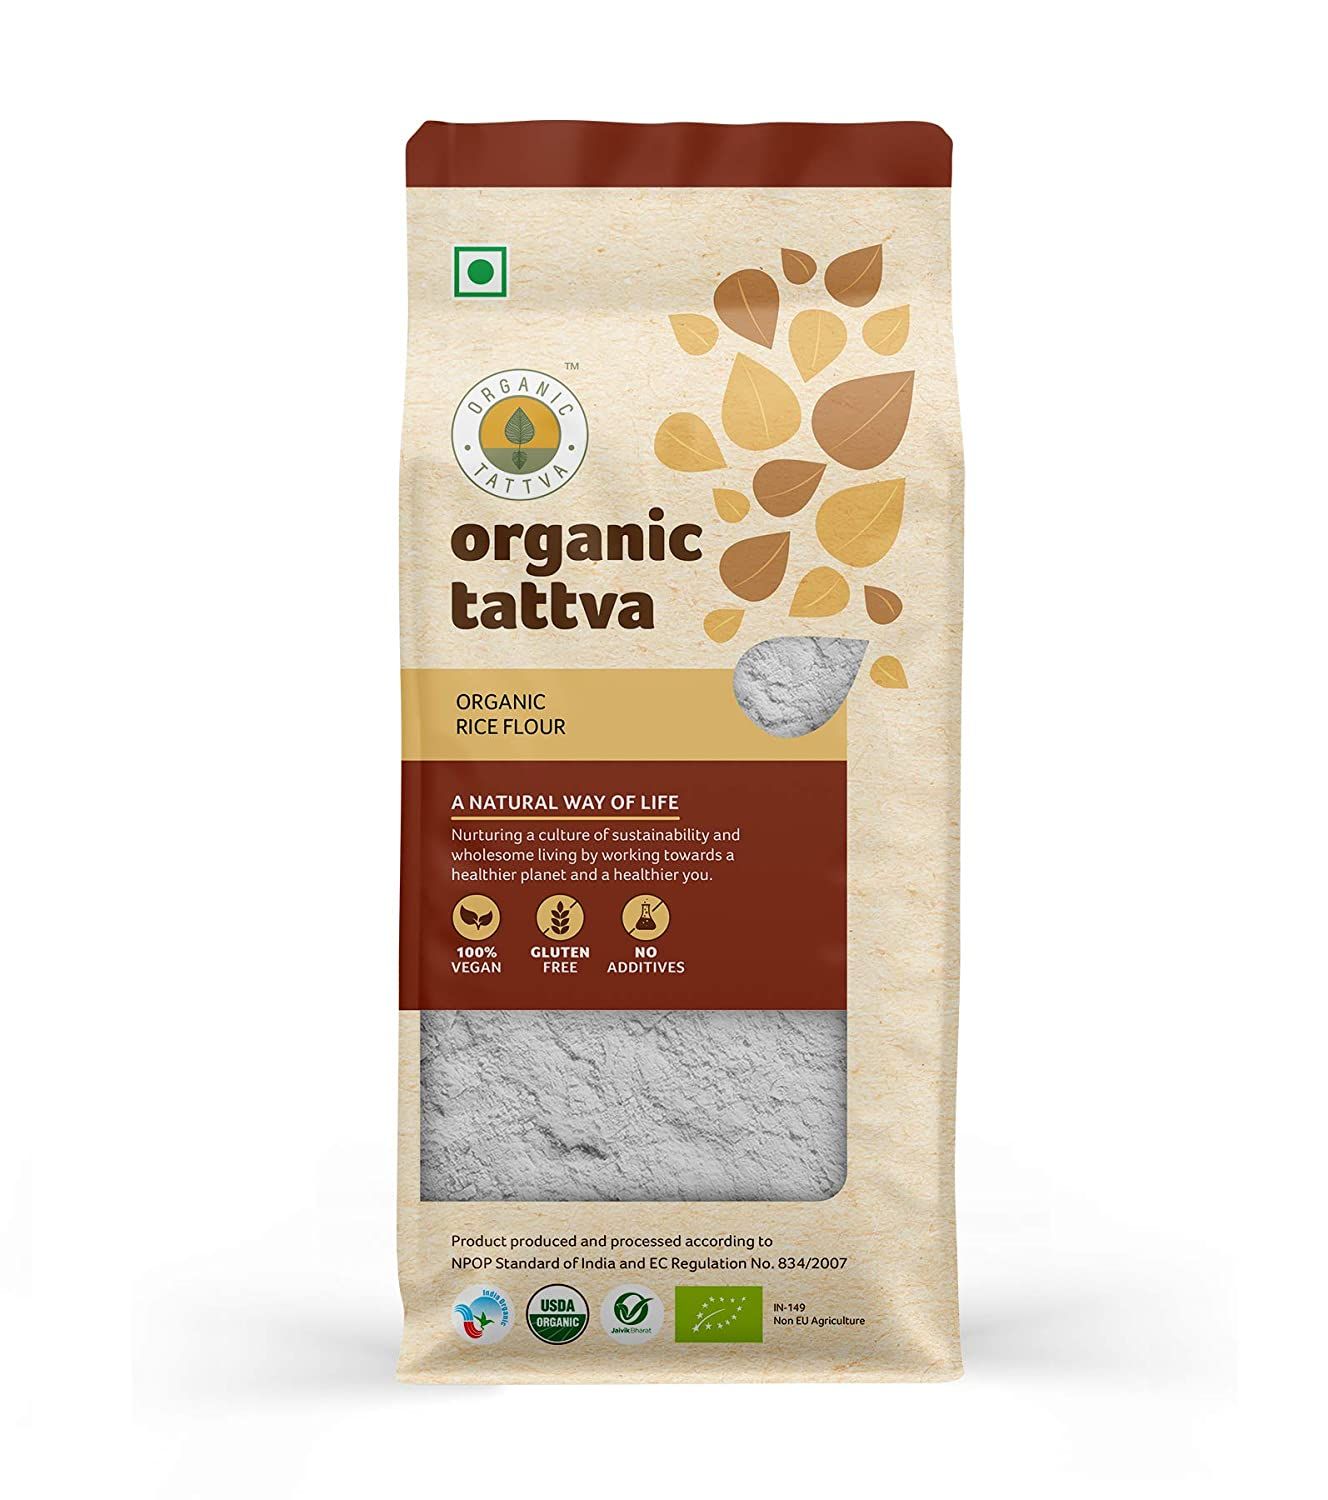 Organic Tattva Rice Flour Image